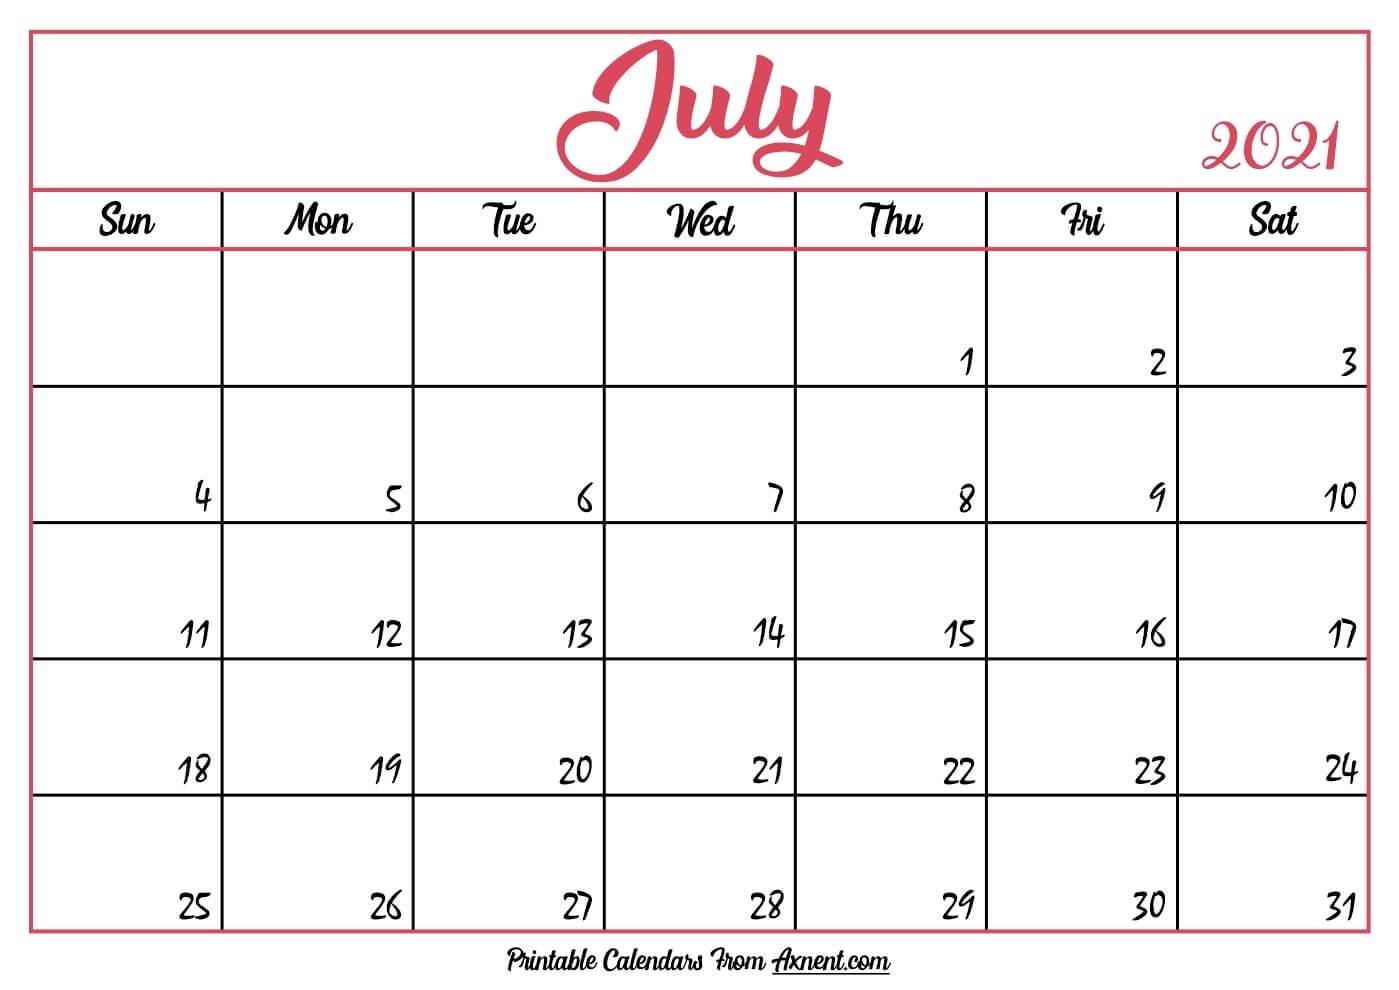 Printable July 2021 Calendar Template - Time Management Tools Printable July 2021 Calendar Template July 2021 Tithi Calendar